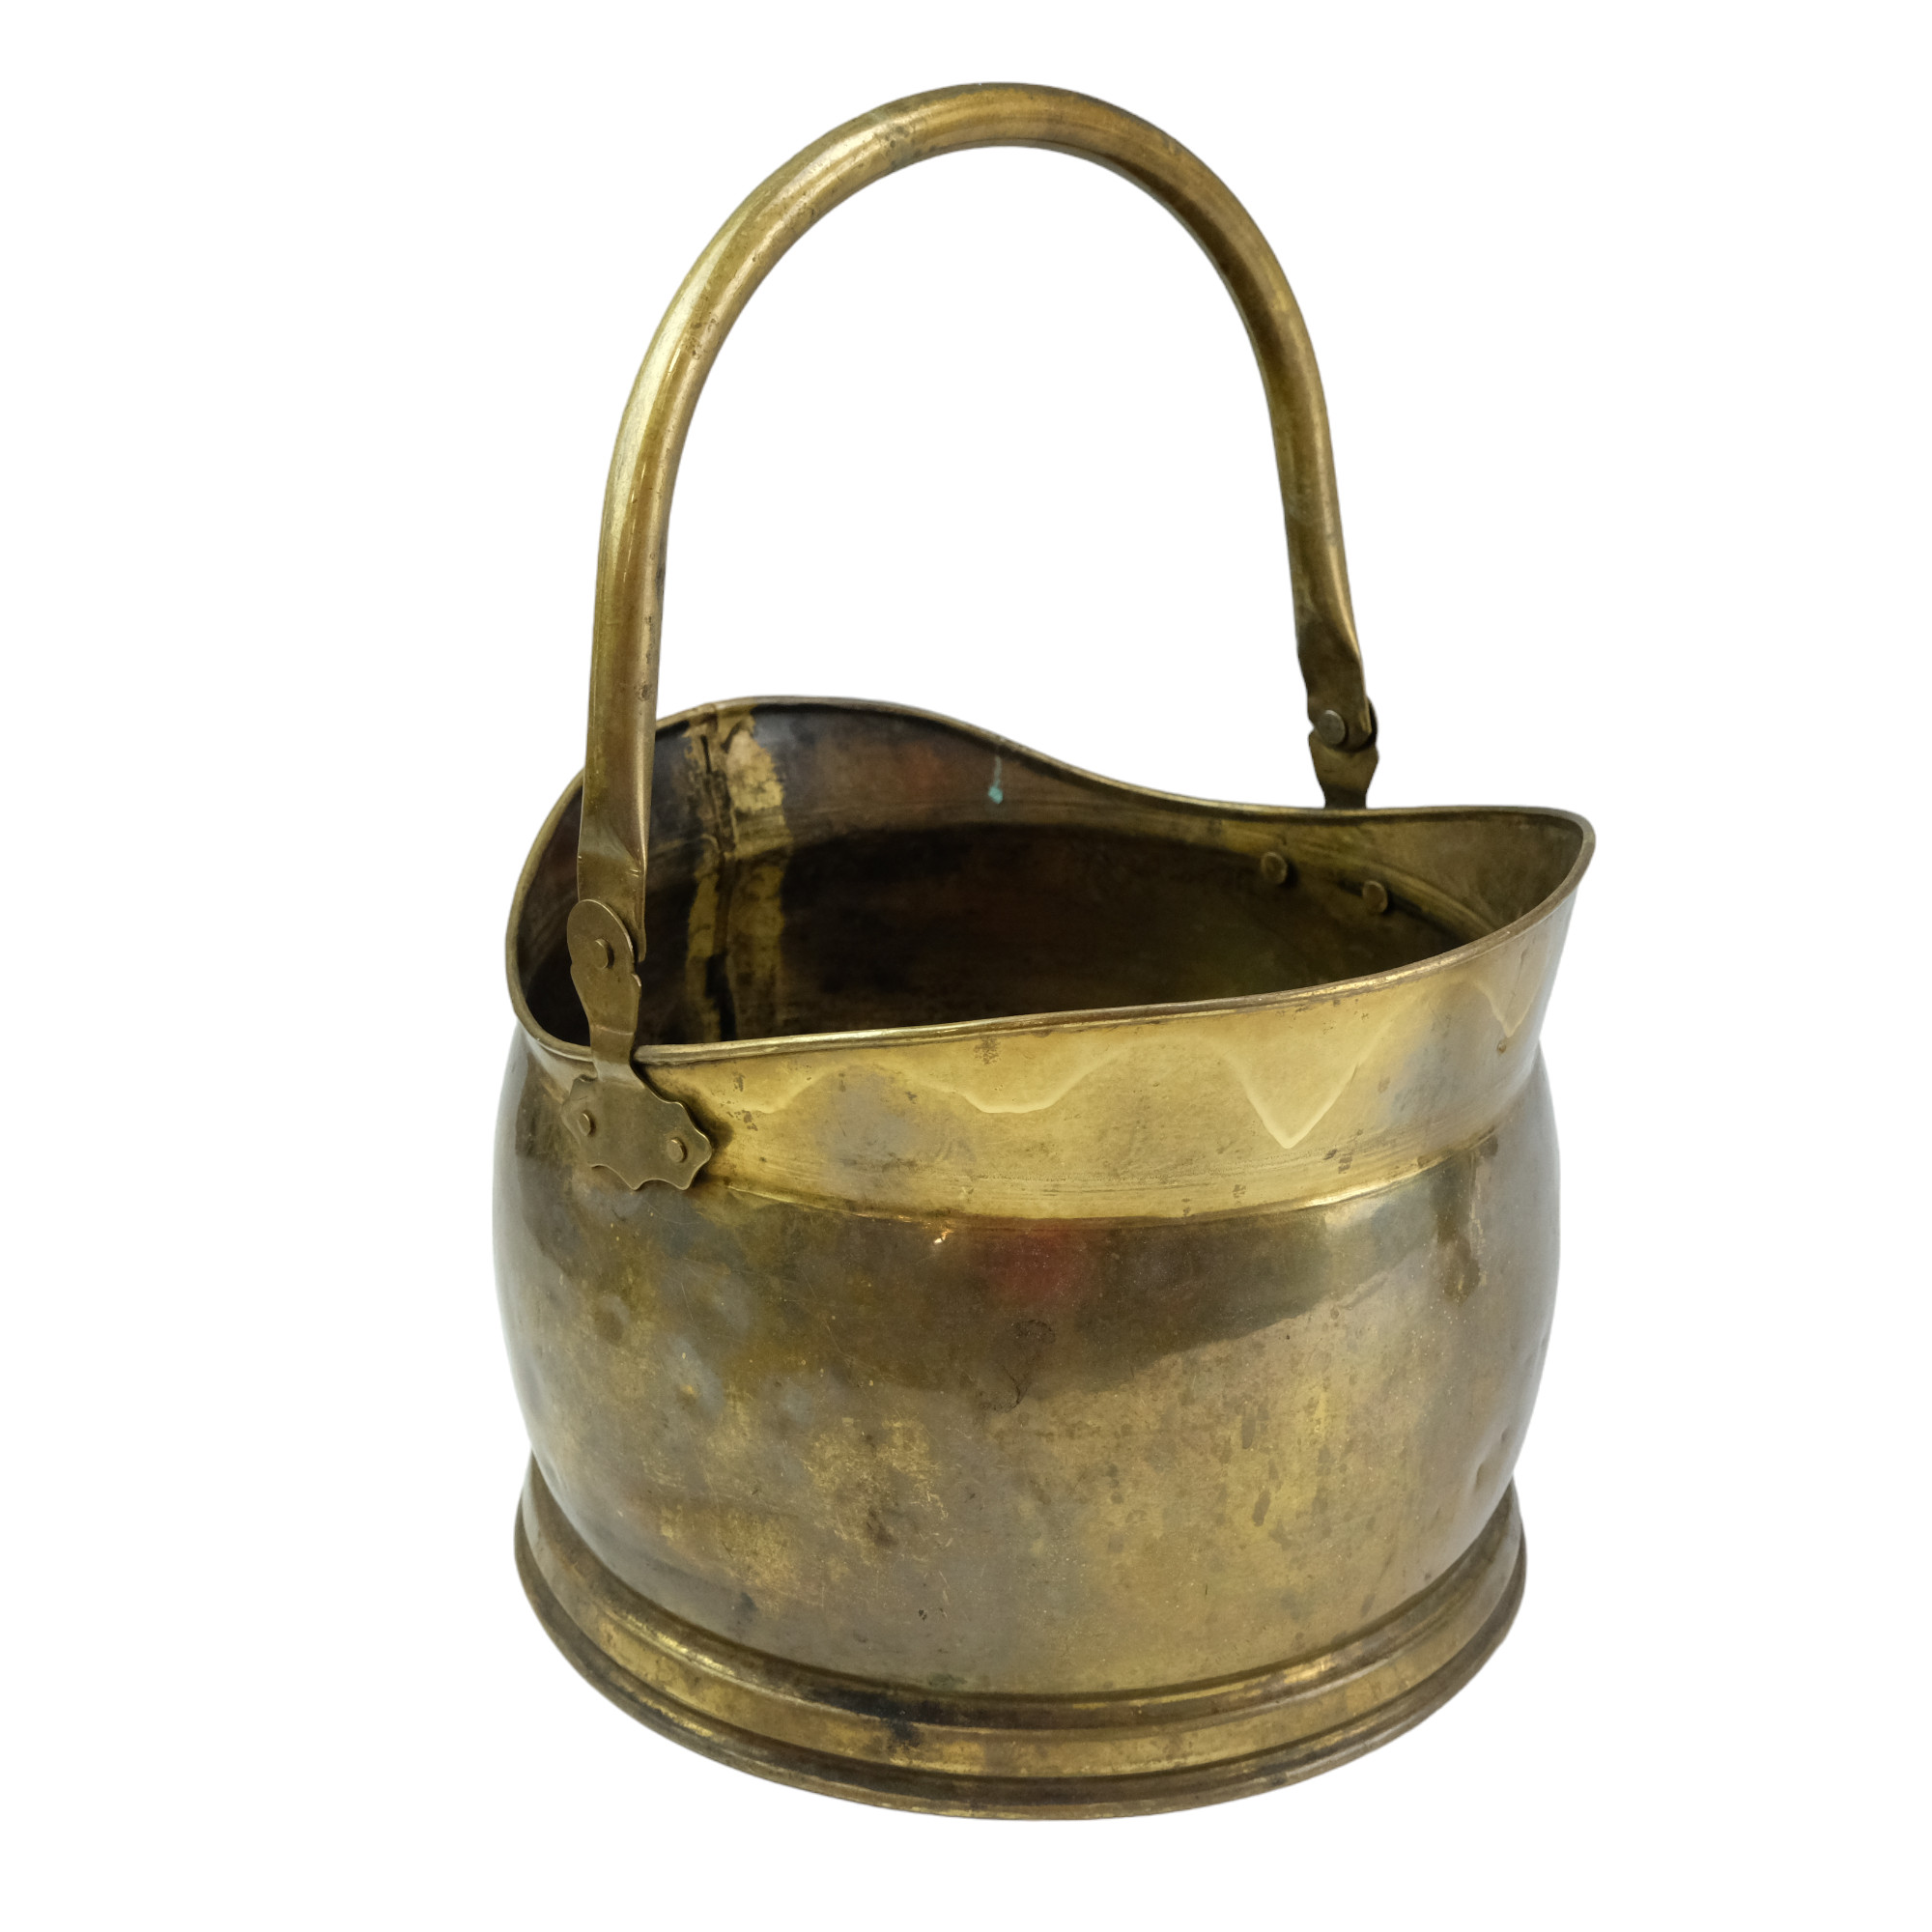 A brass coal helmet and fireside companion set - Image 2 of 4